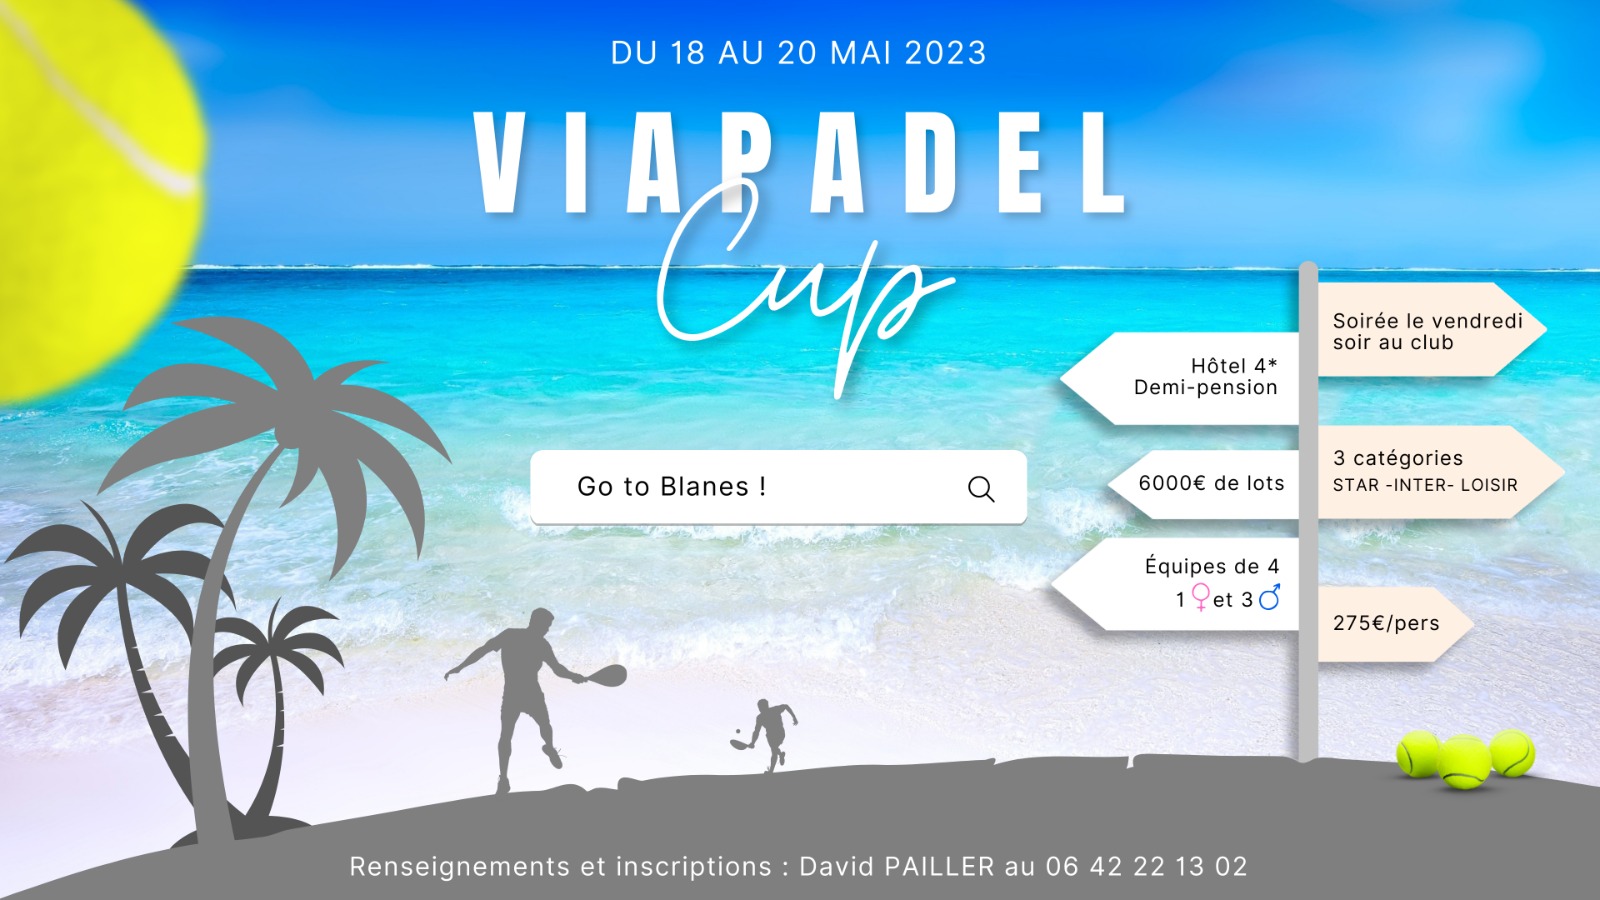 Via Padel Cup 2023: skal vi en tur igen?